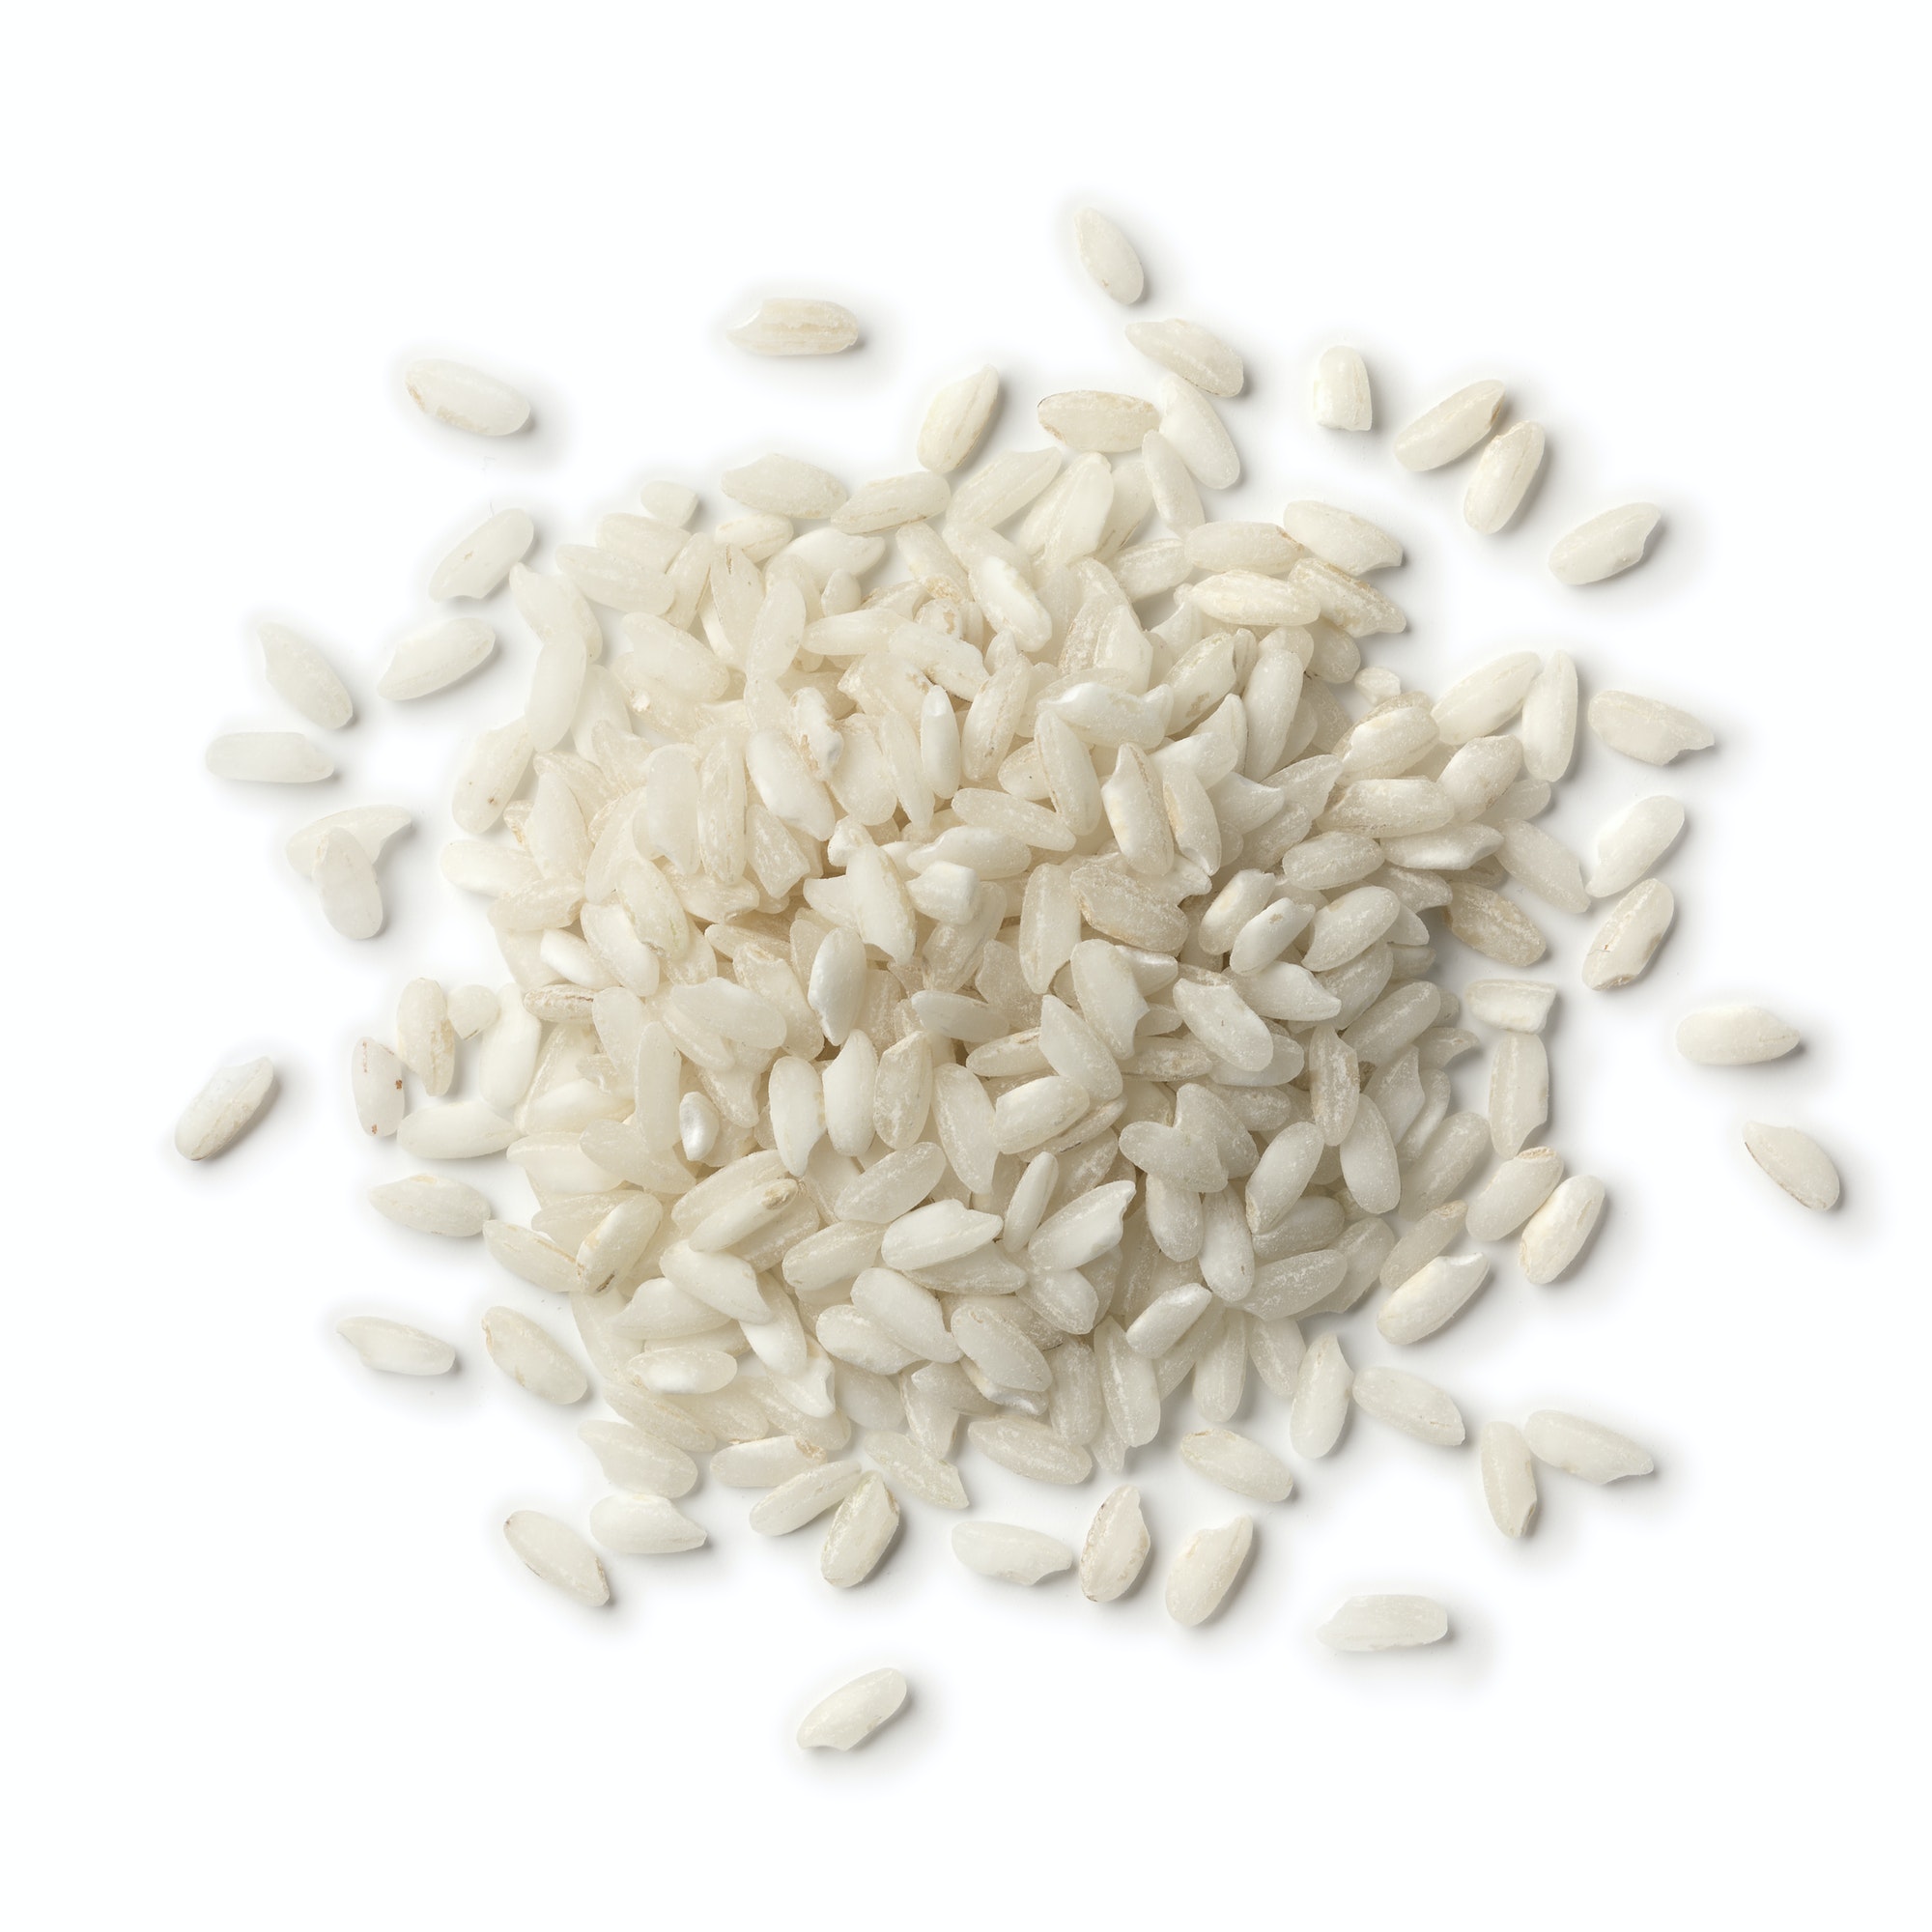 Heap of Carnaroli risotto rice